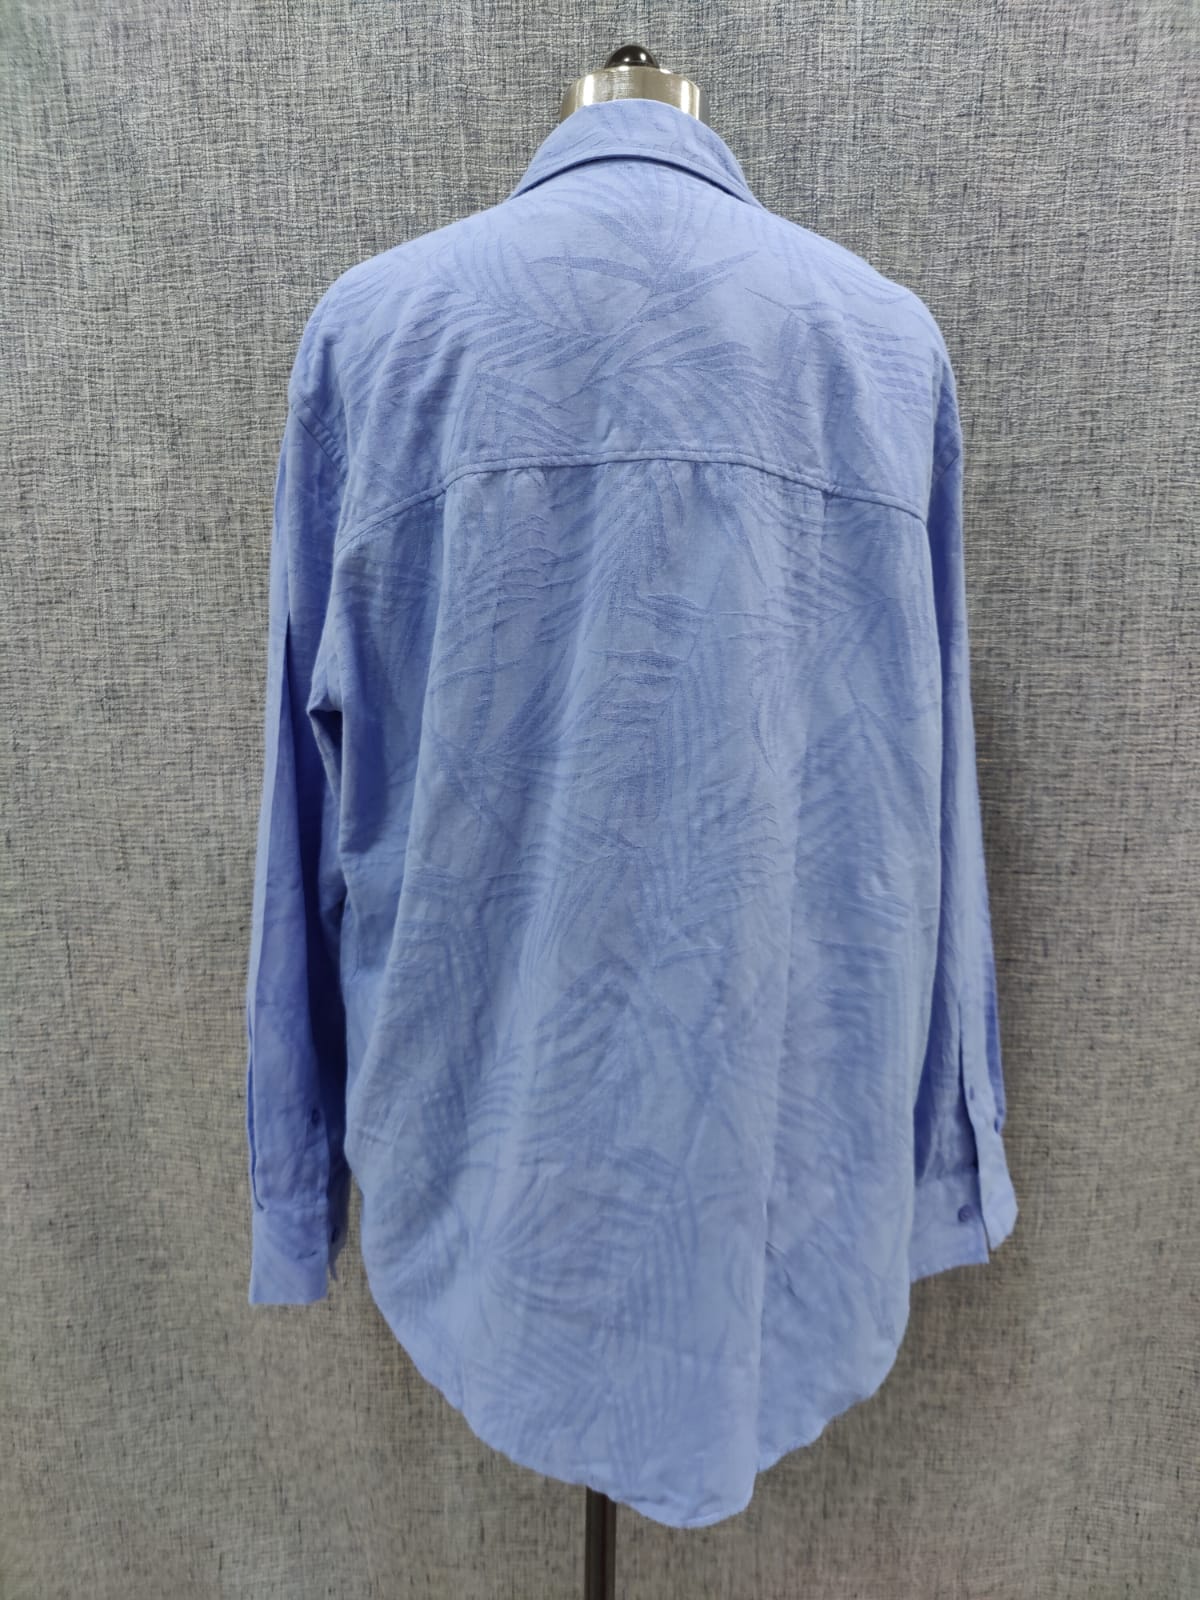 ZARA Light Blue Printed Shirt | Relove